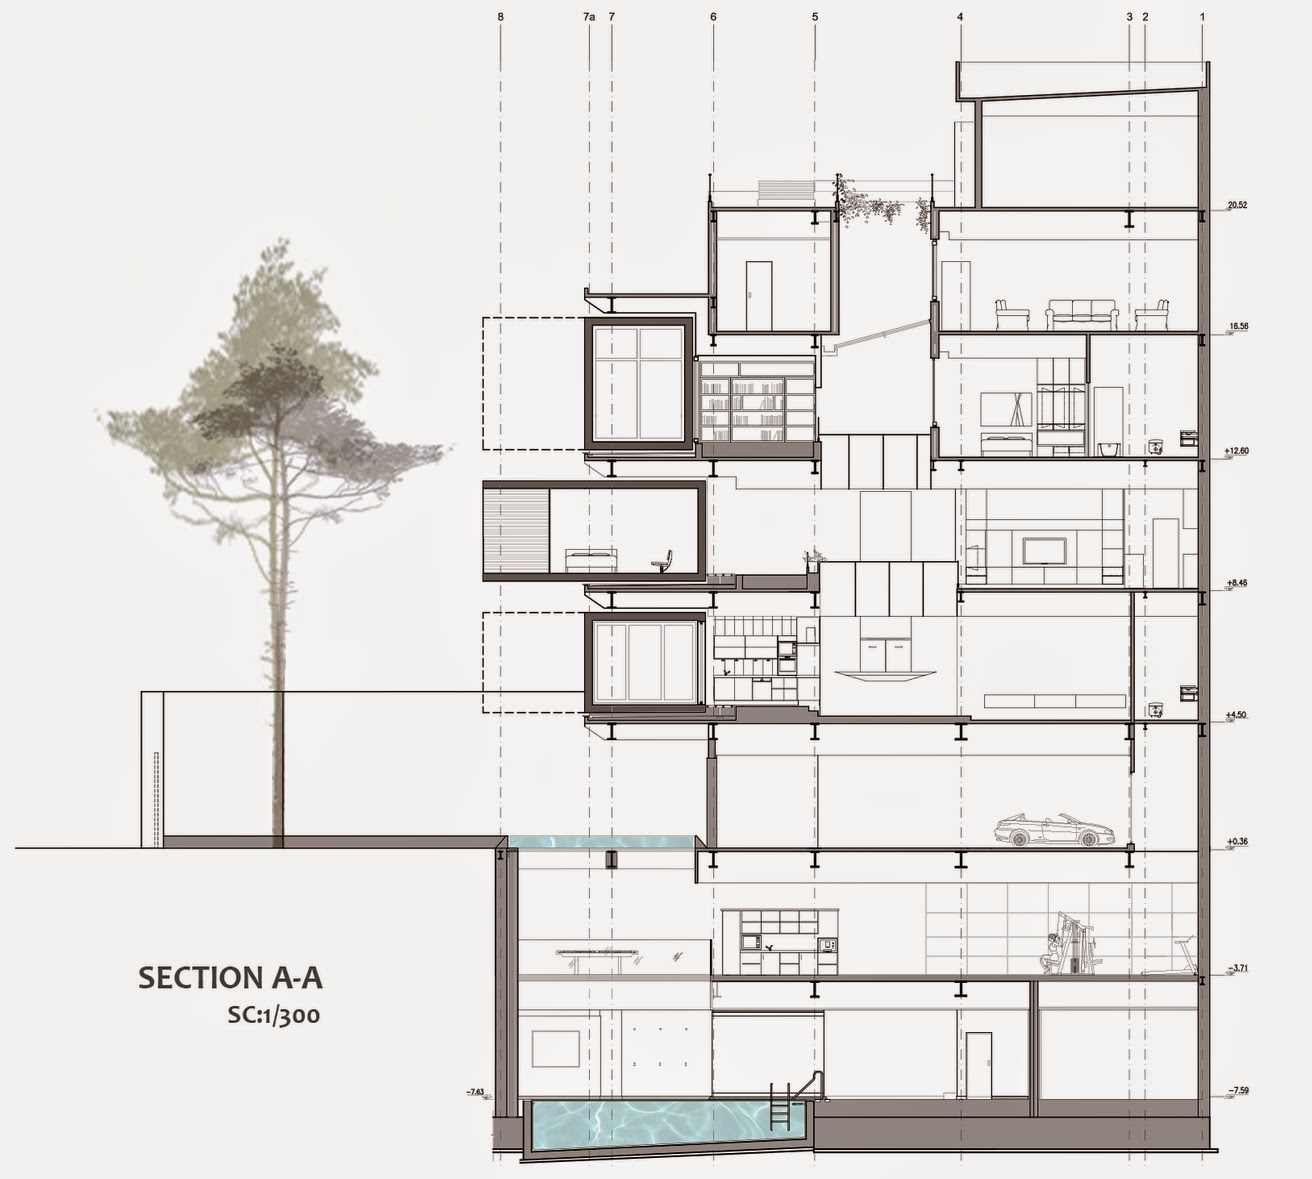 05-Section-Nextoffice-Sharifi-Ha-House-Revolving-Rooms-Architecture-www-designstack-co